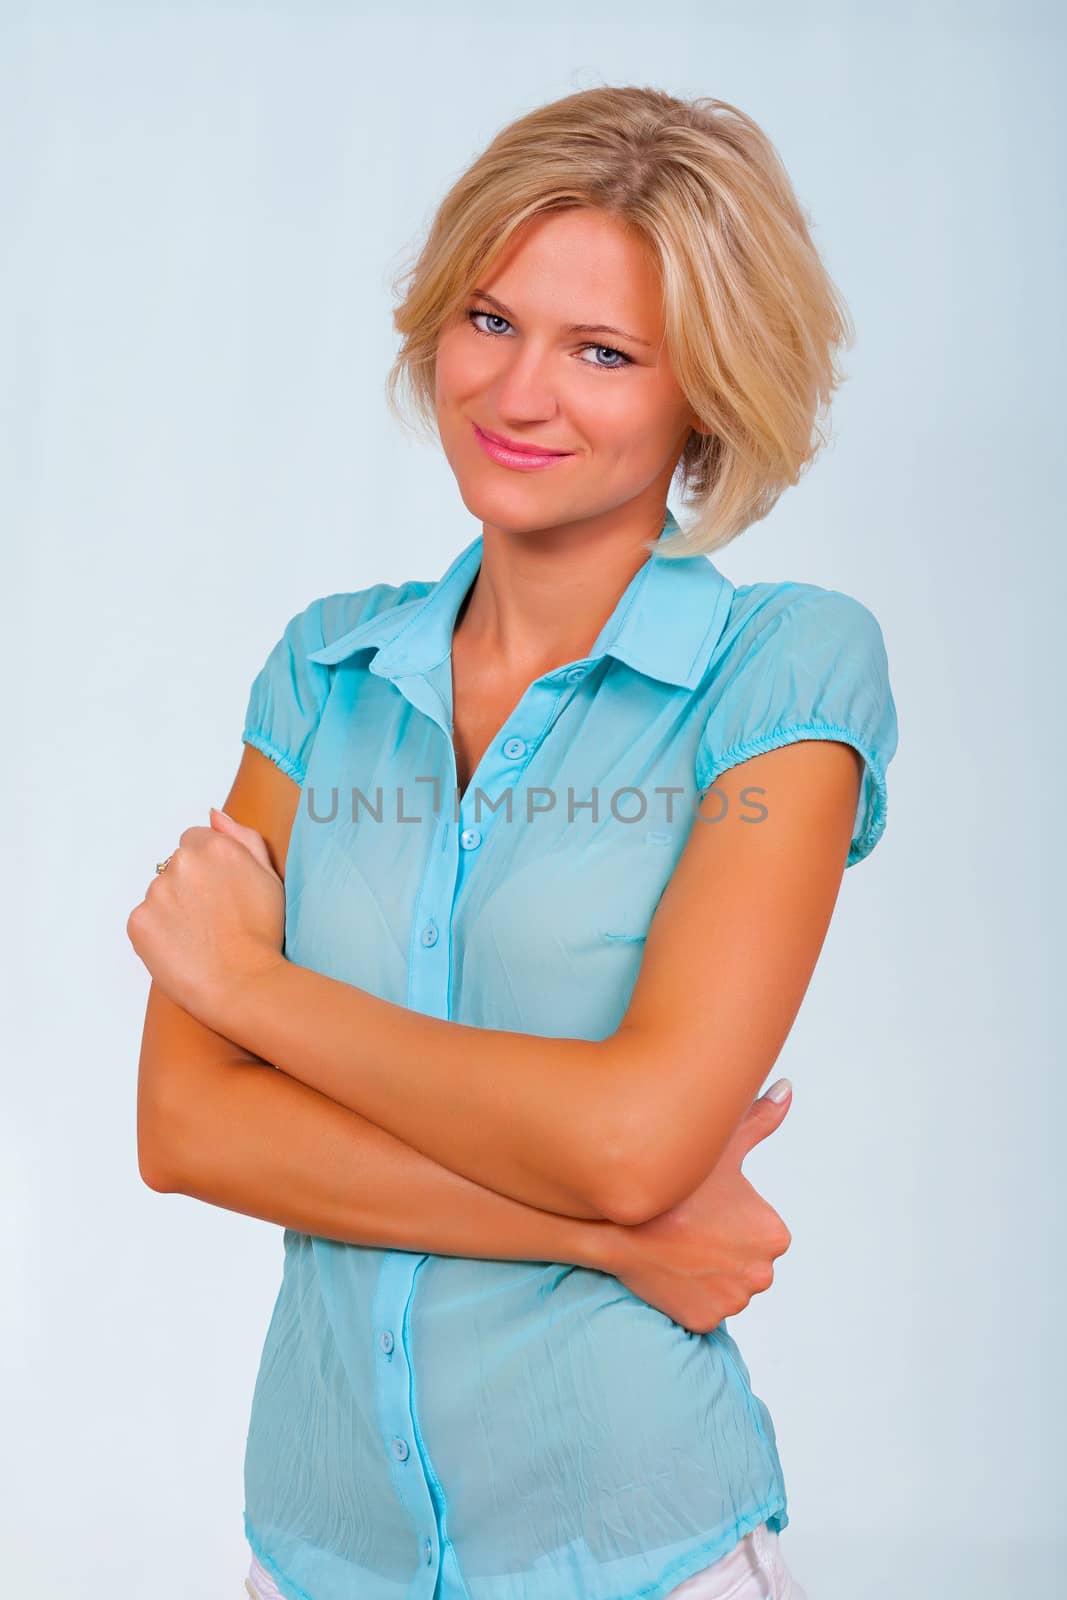 a beautifule girl wearing a light blue blouse